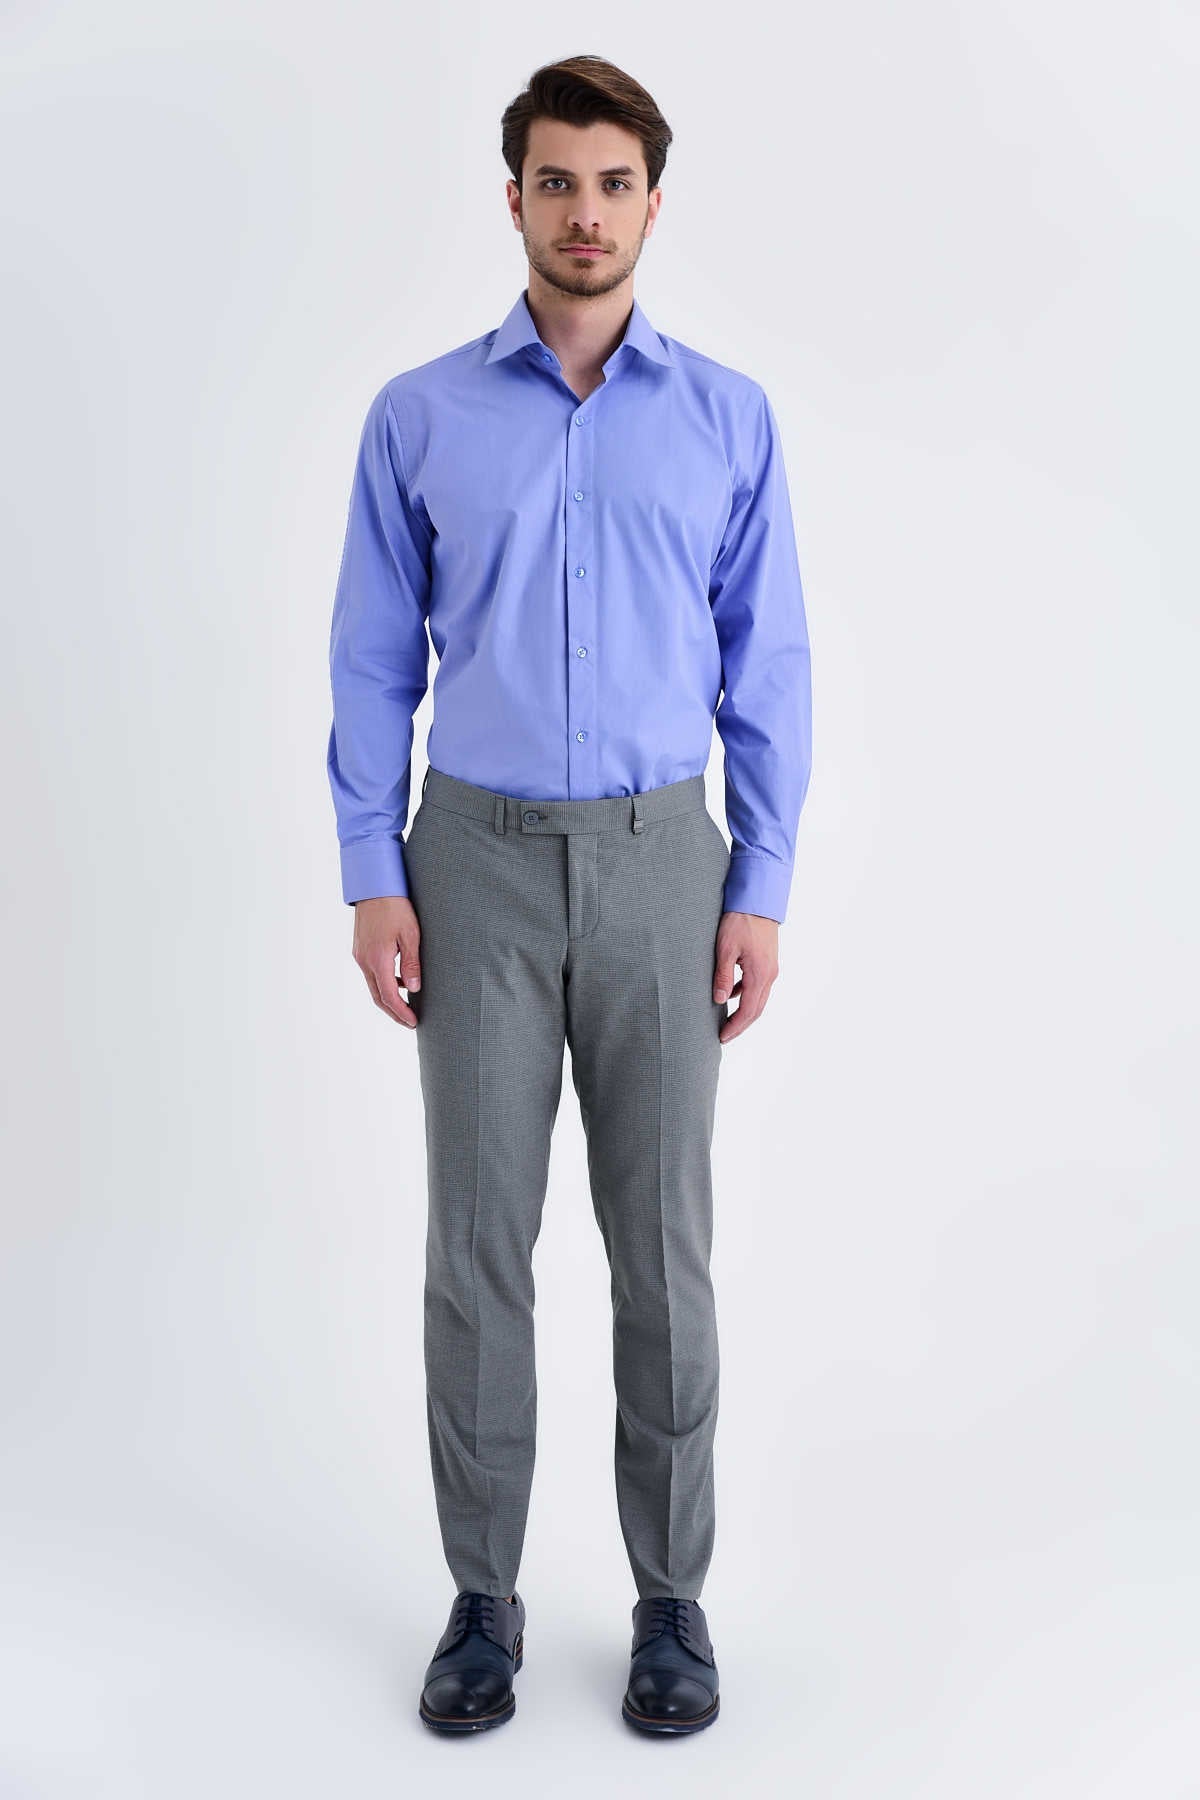 Mens Chinos Casual Pants Slim Fit Stretch Plaid Dress Pants for Men  Flat-Front Skinny Business Pencil Long Pant - Walmart.com